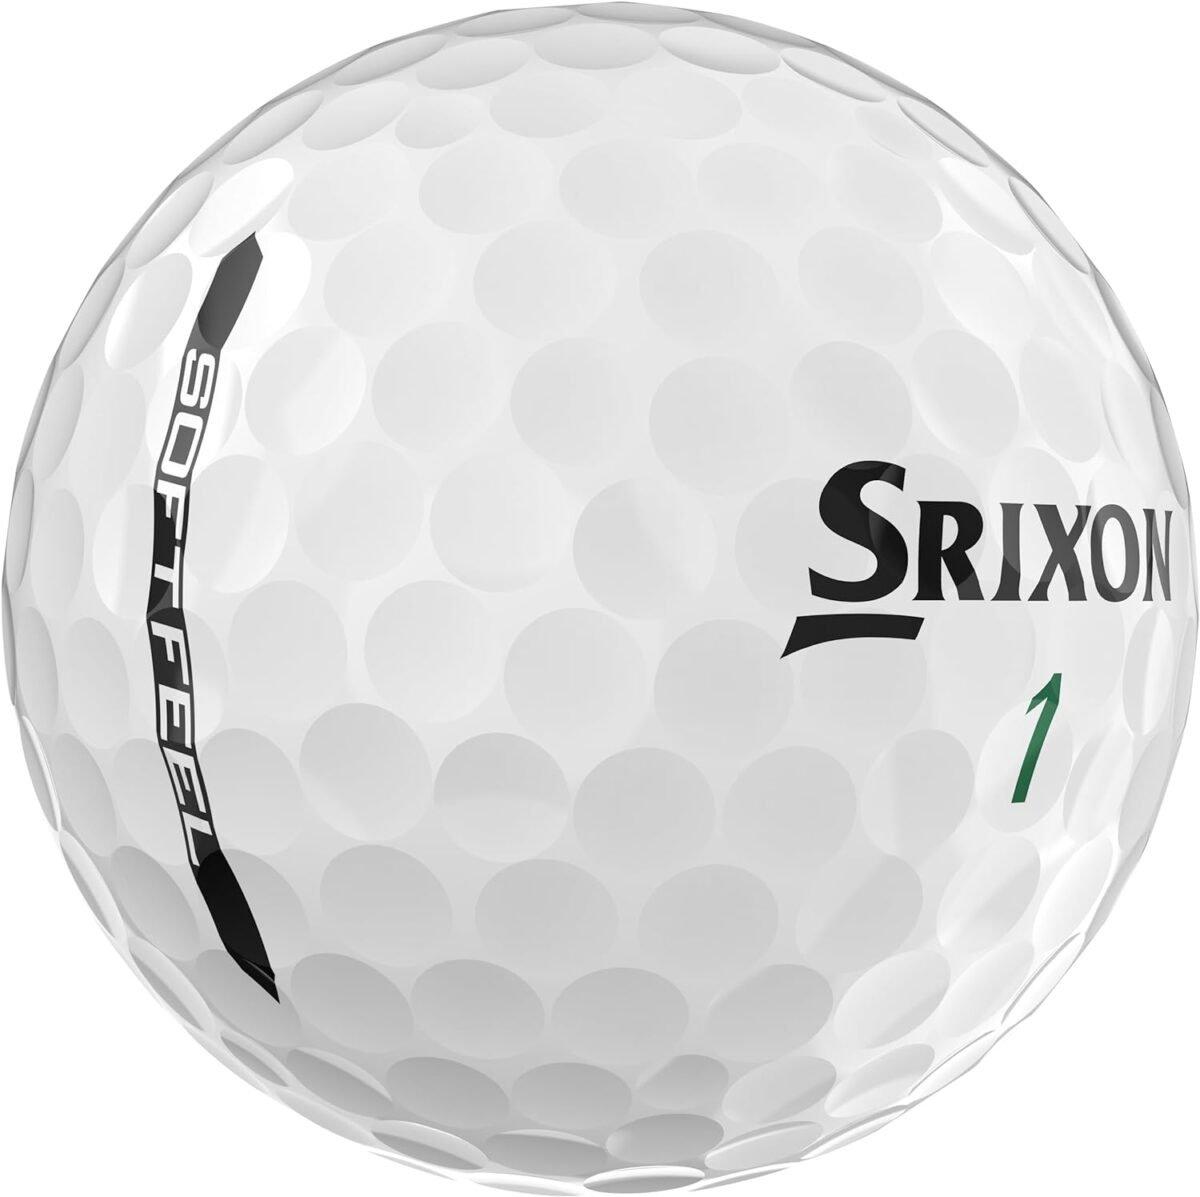 Comparing 5 Golf Balls: Callaway Supersoft, Hex Soft, Srixon, Supersoft Max, Chromax